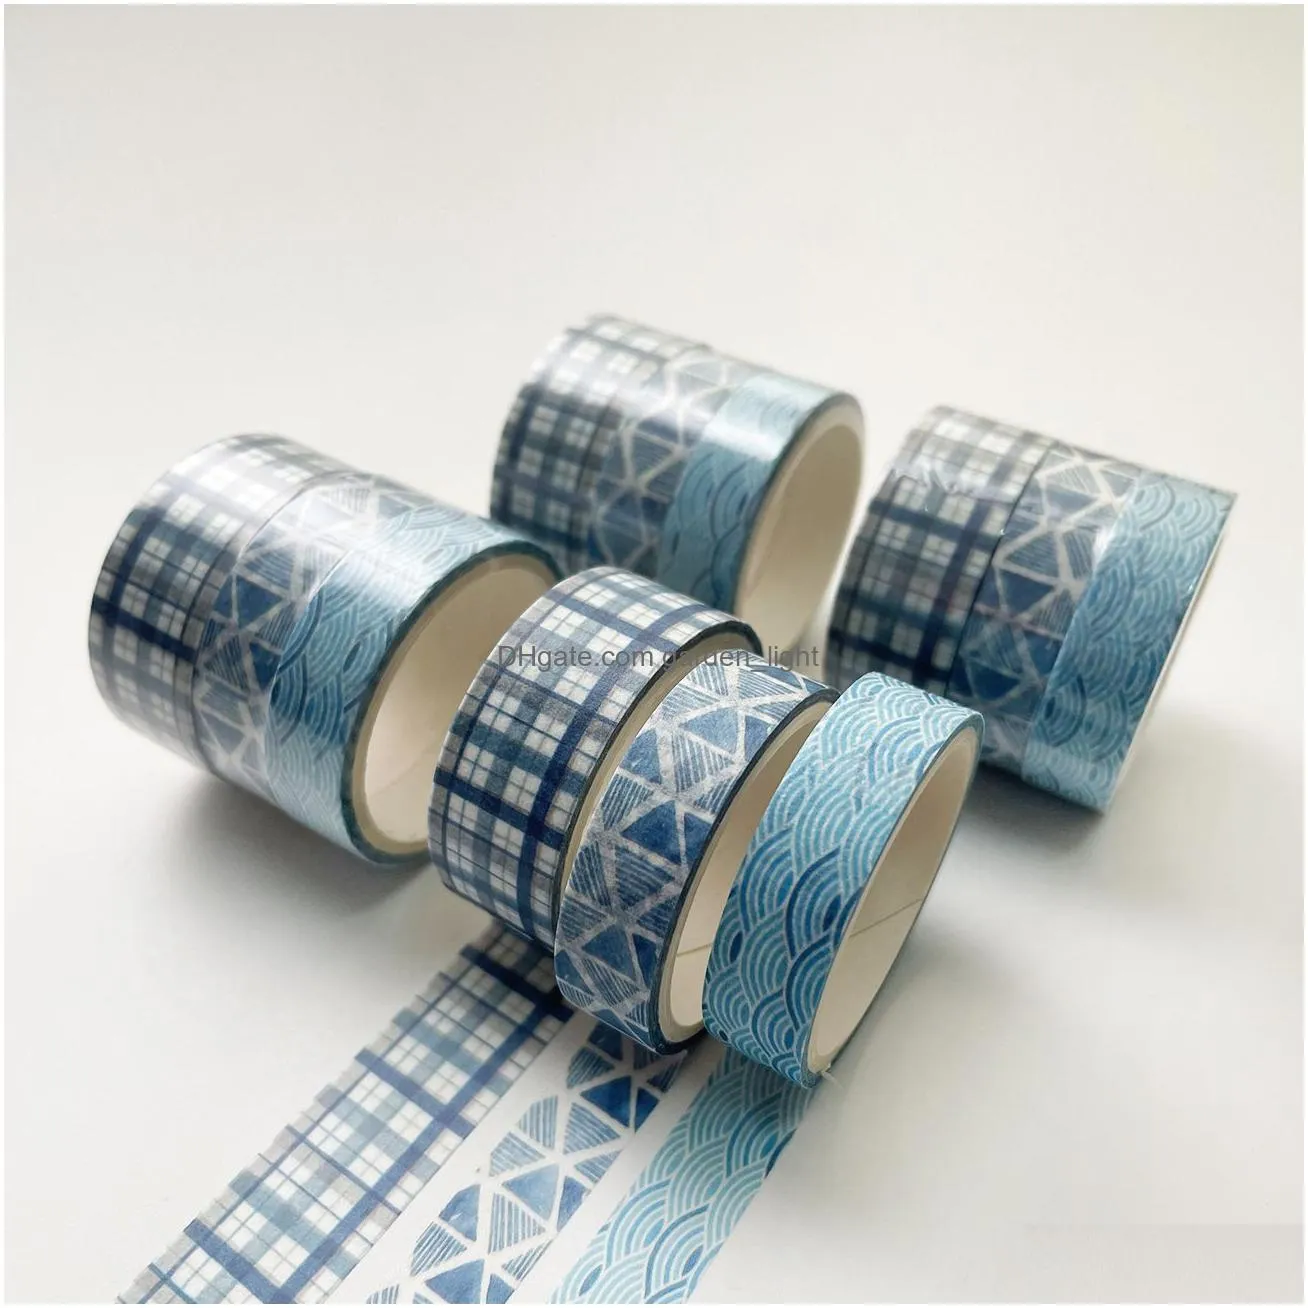 3 pcs/set washi tape adhesive diy decoration japanese masking sticker for scrapbook journal planner arts crafts xbjk2112 2016